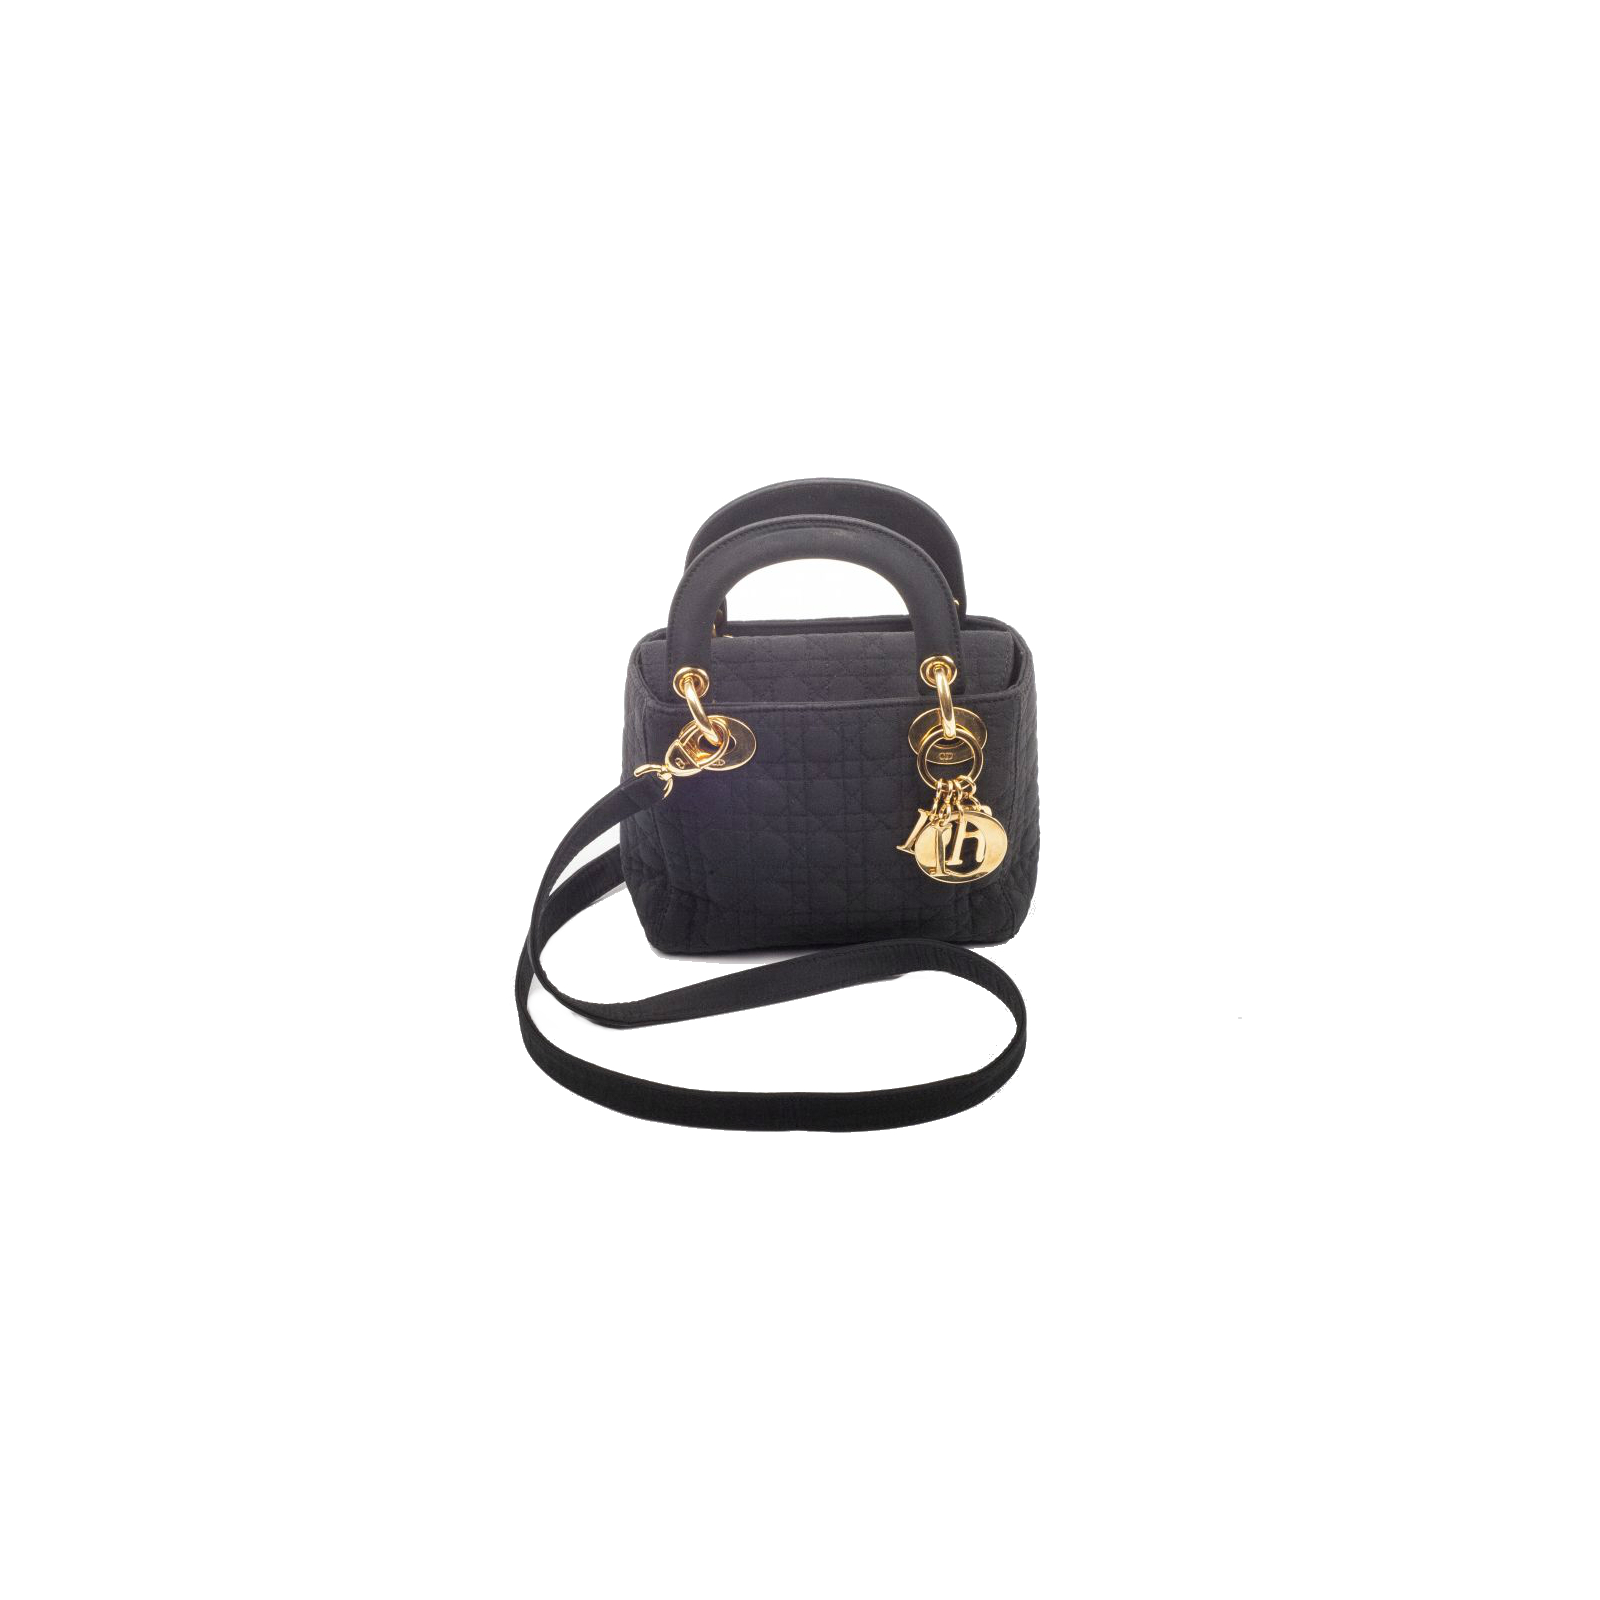 Mini "Lady Dior" hand bag